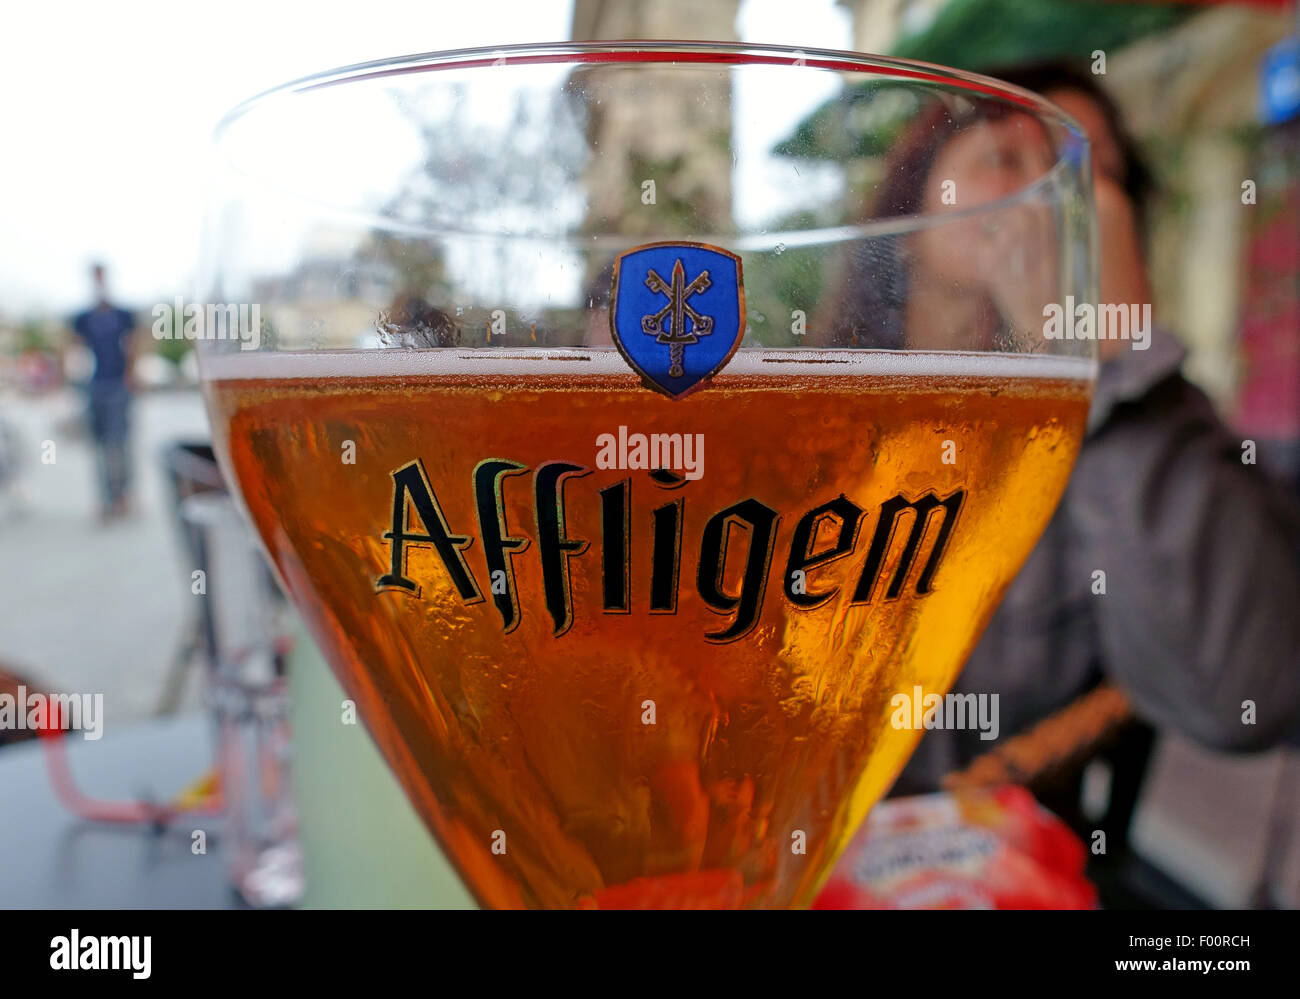 Glass of Affligem Belgian pale ale style beer, France Stock Photo